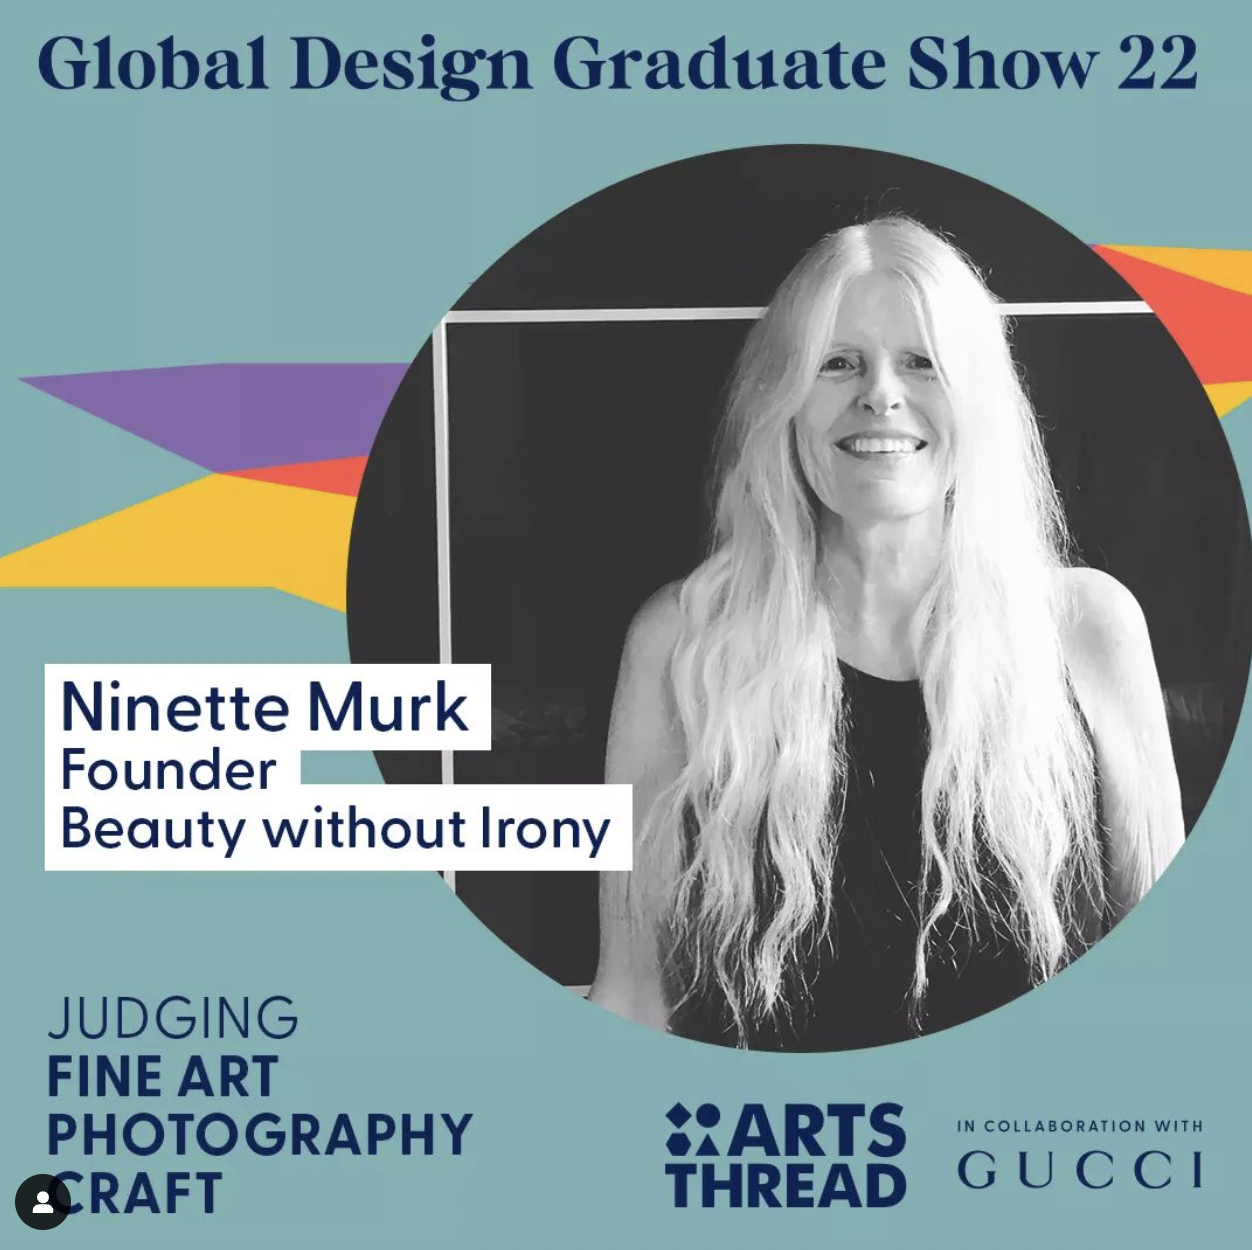 Global Design Graduate Show 2022